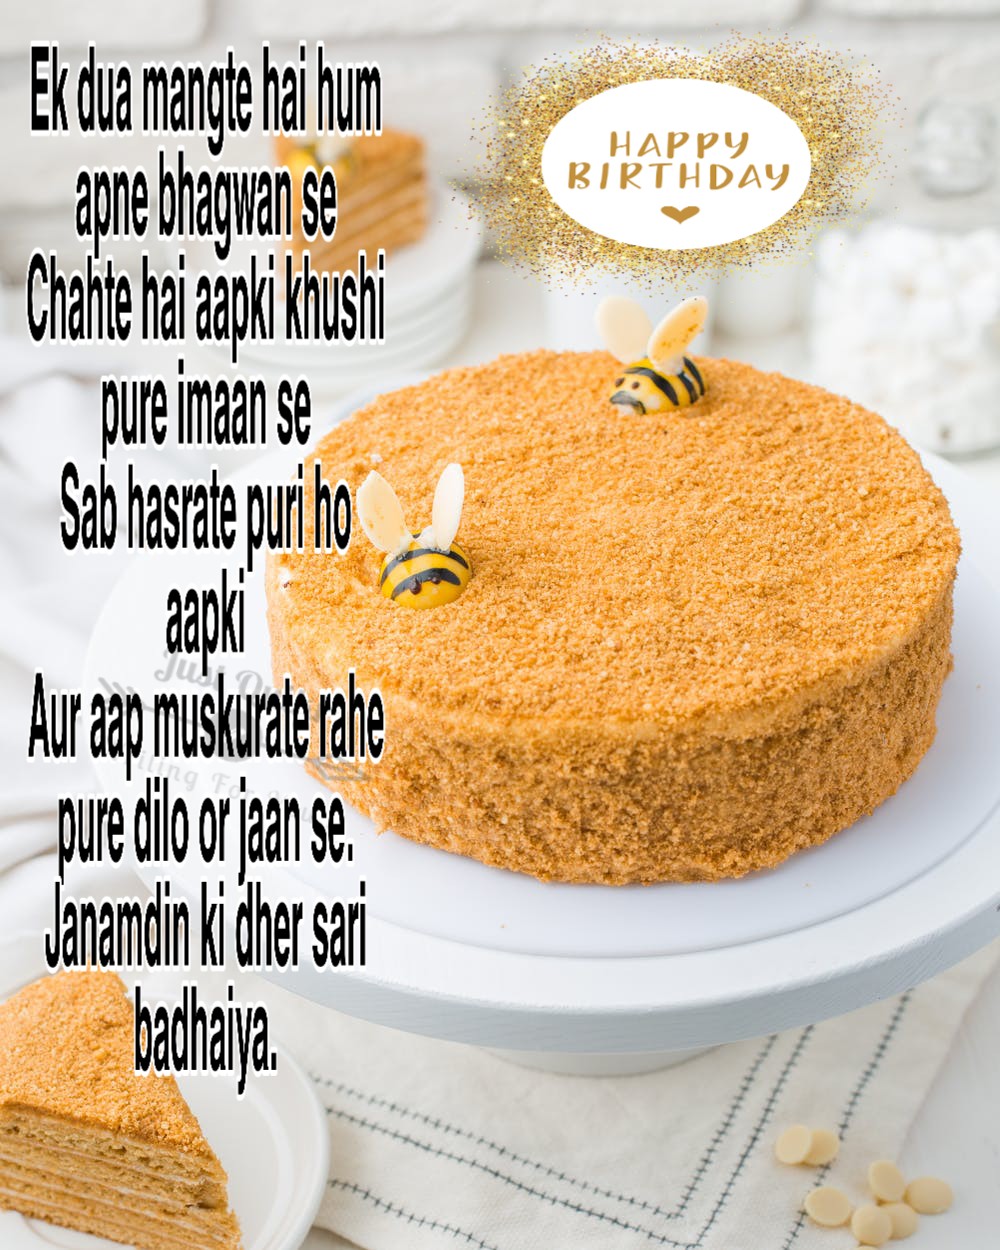 Happy Birthday Cake HD Pics Images with Shayari Sayings for Engineer